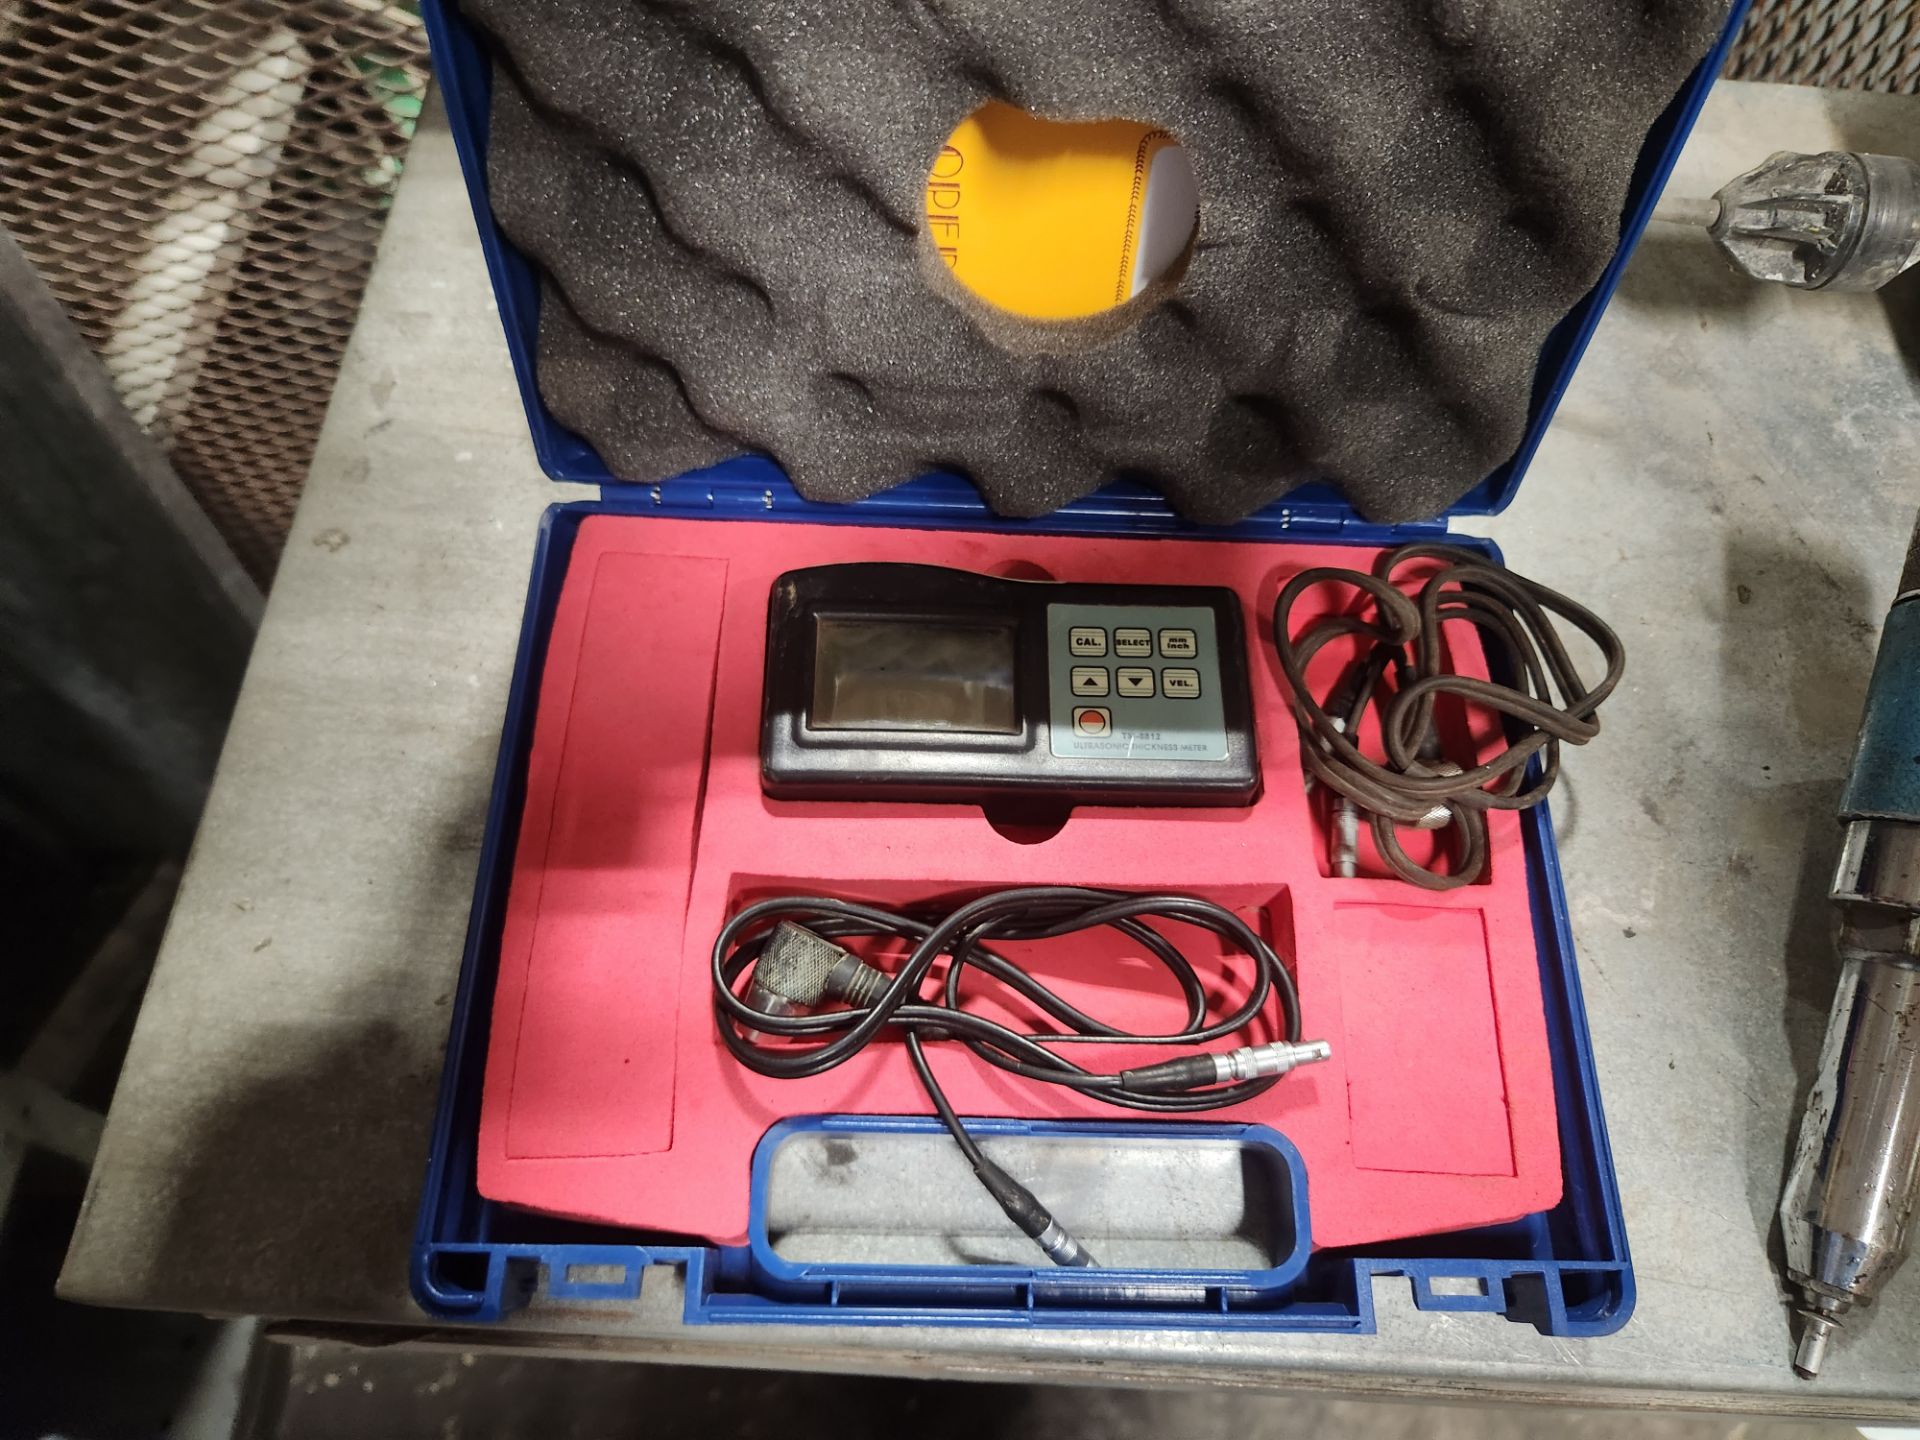 Digital Ultrasonic Thickness Meter TM-8812